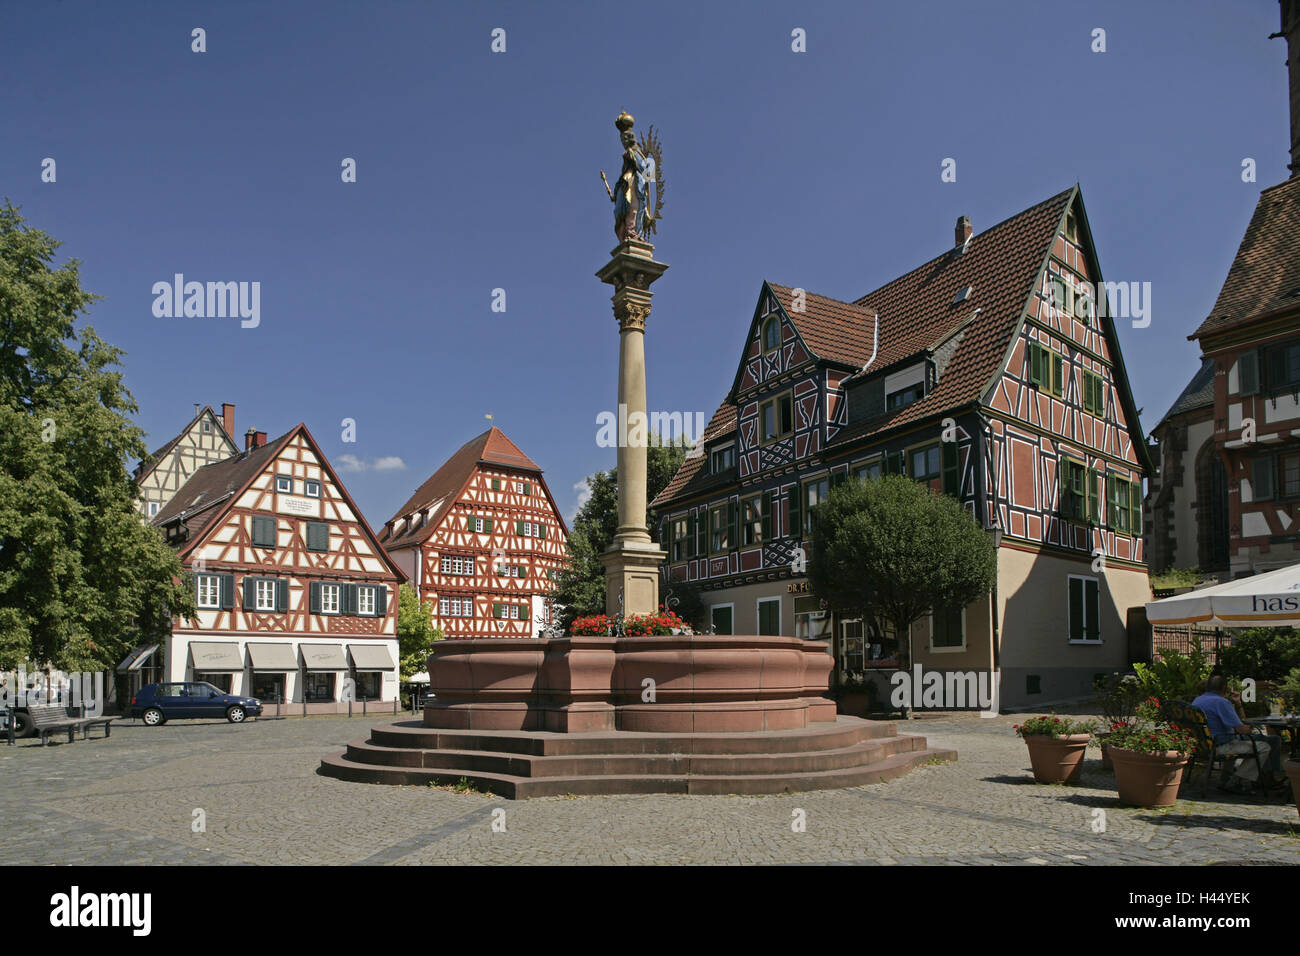 Germany, Baden-Wurttemberg, shop castle, marketplace, Marien's pillar, half-timbered houses, Stock Photo